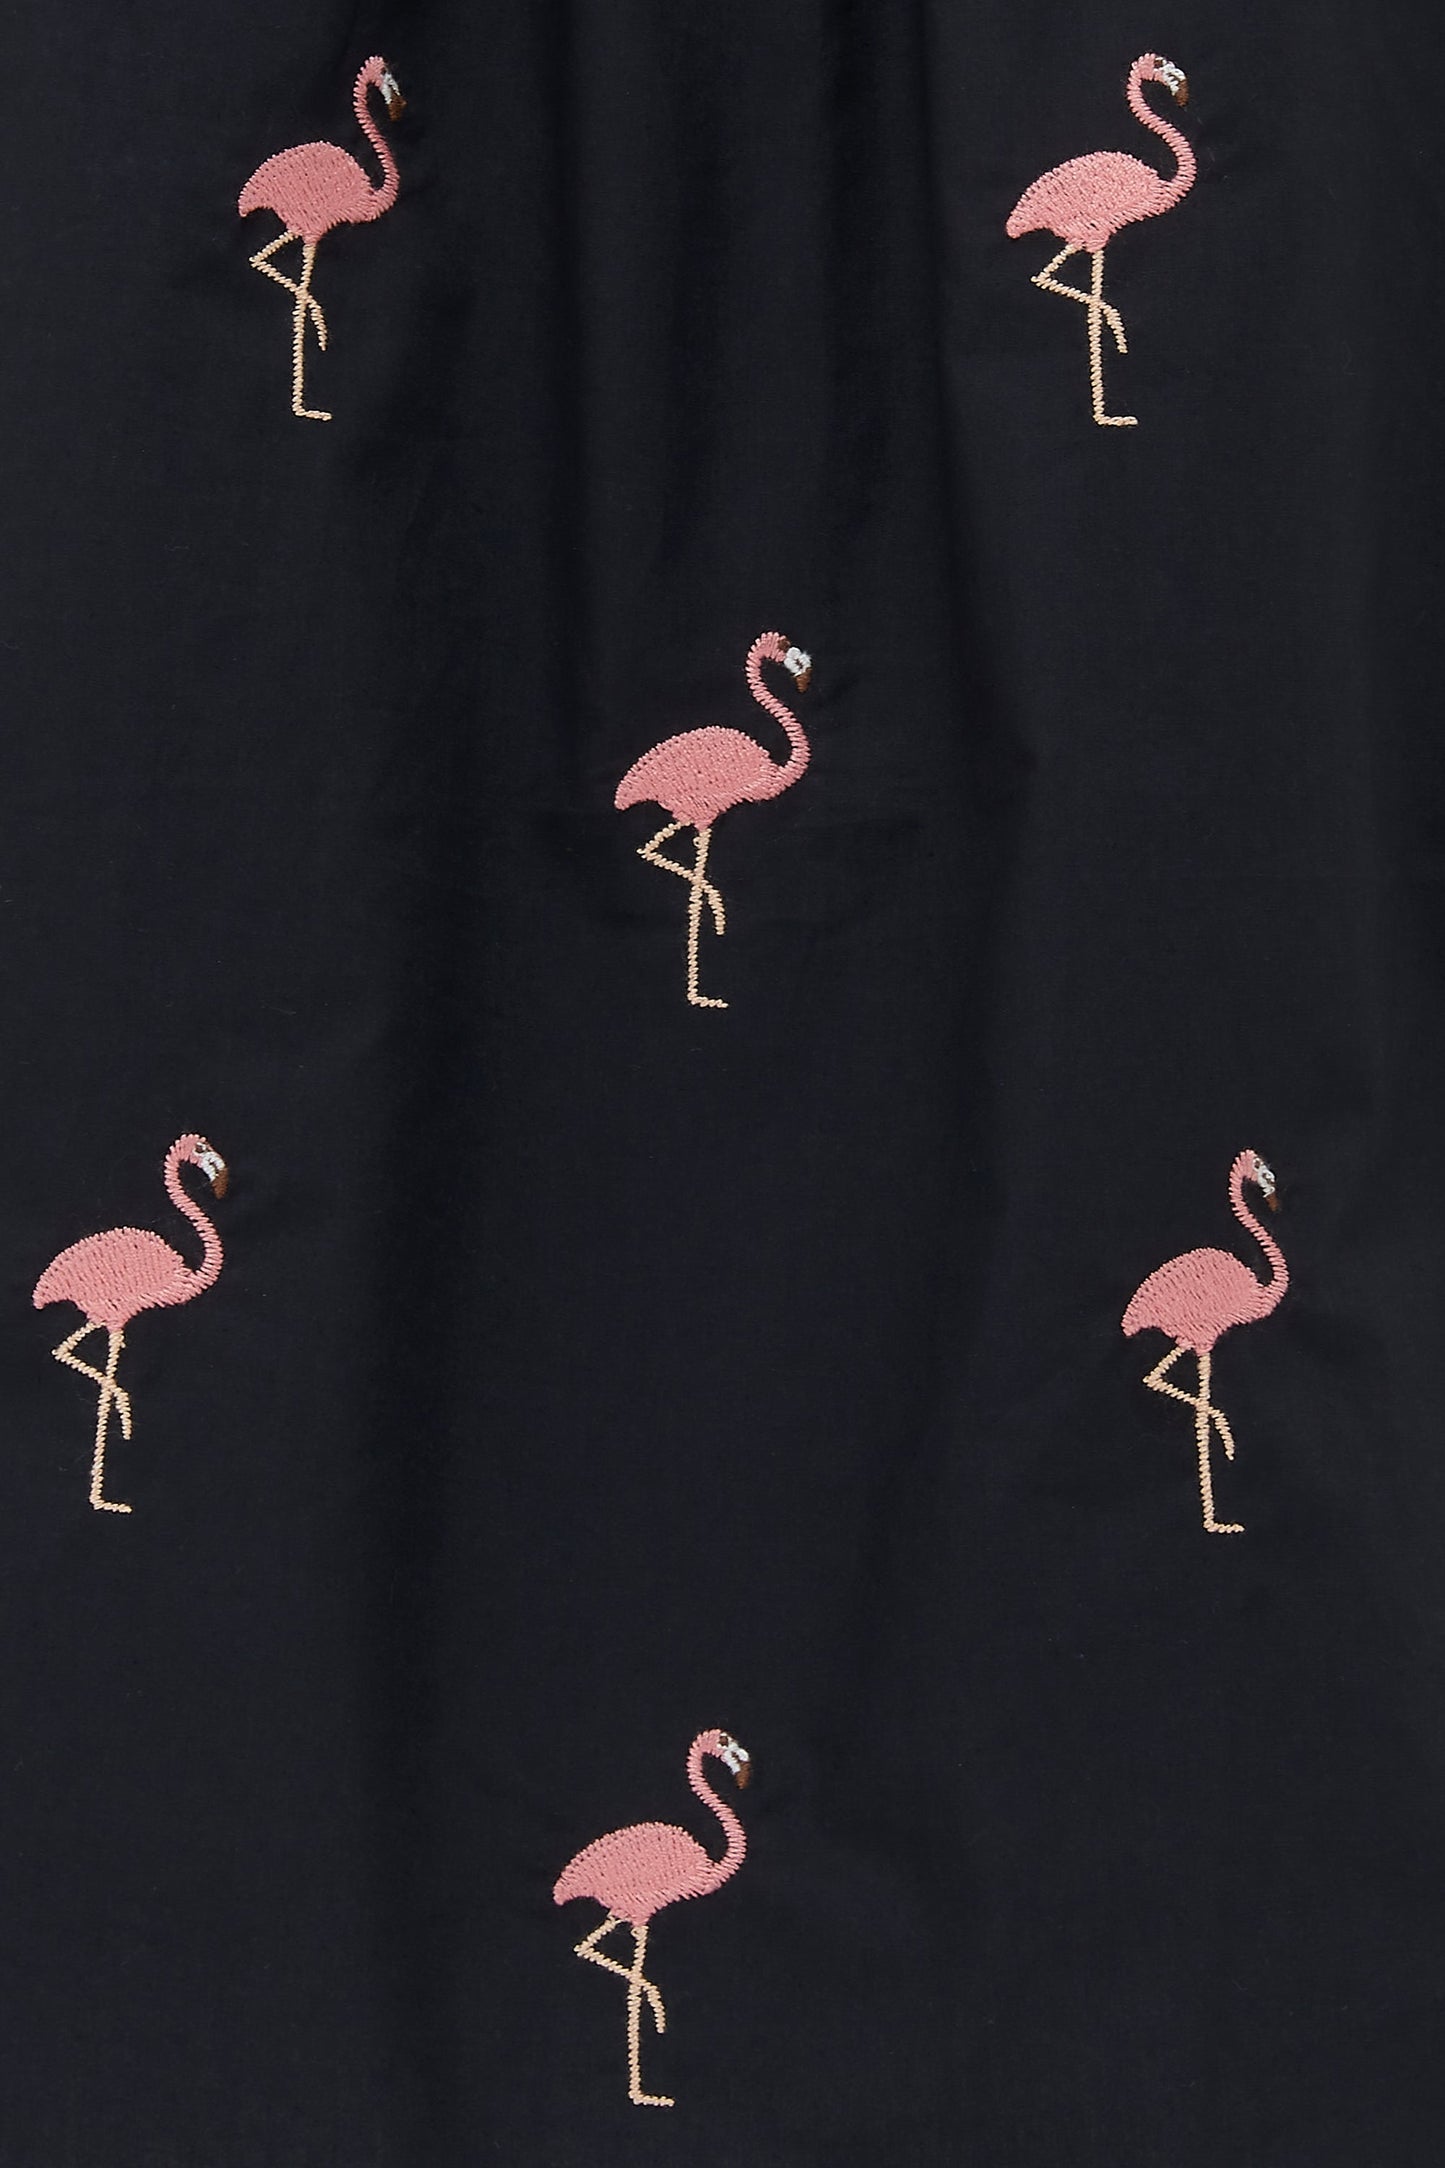 *Gerdie Embroidered Top Black Flamingo*i